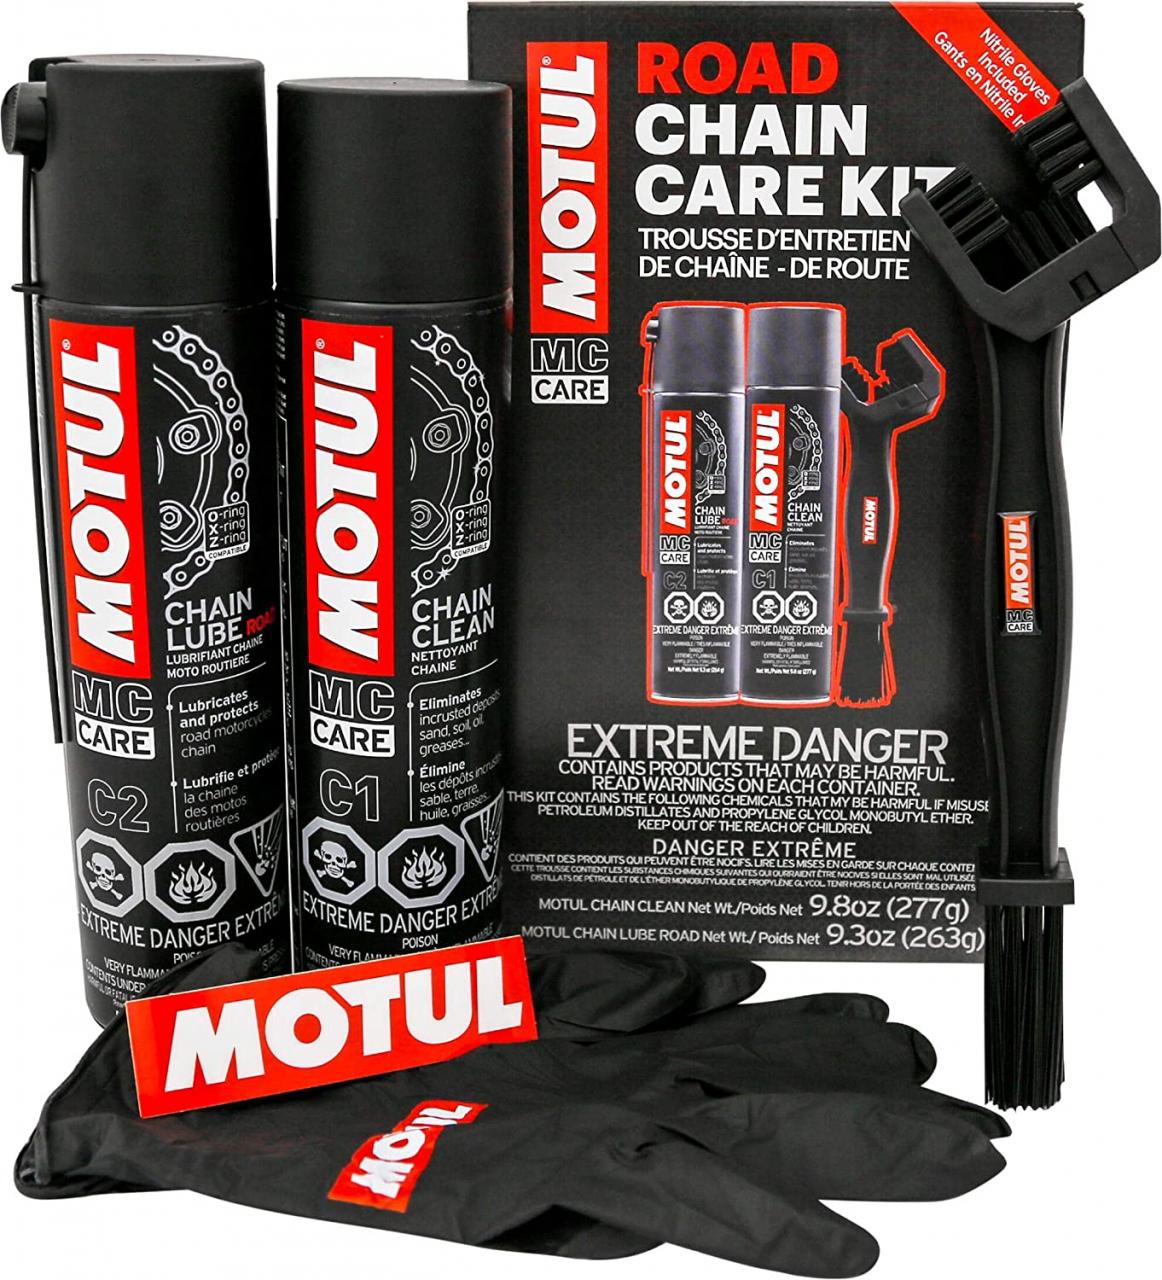 Motul Launches MC Care Product Line